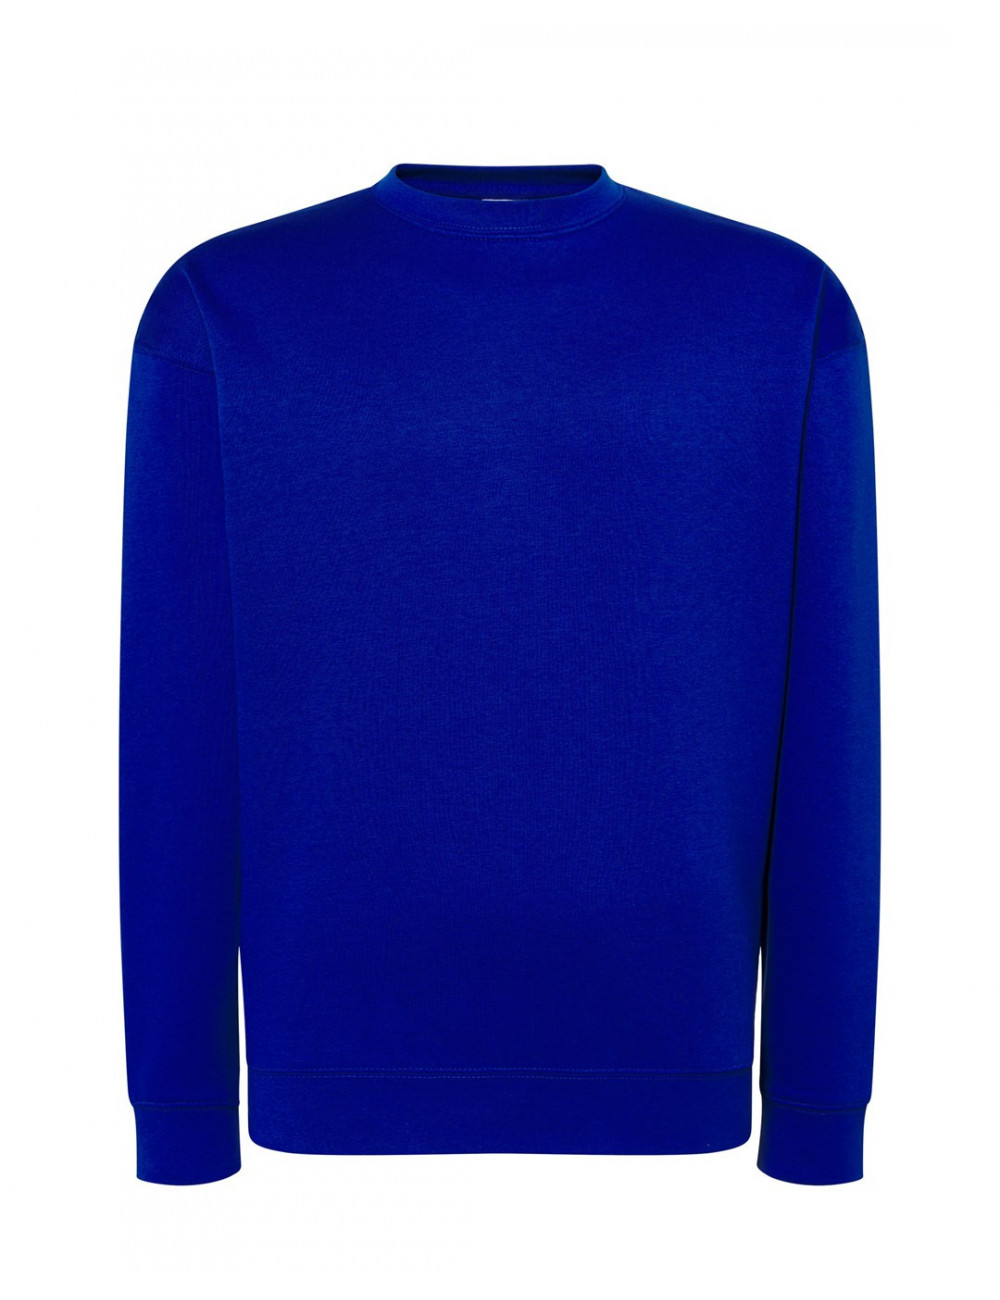 Bluza dresowa męska swra 290 sweatshirt royal niebieski Jhk